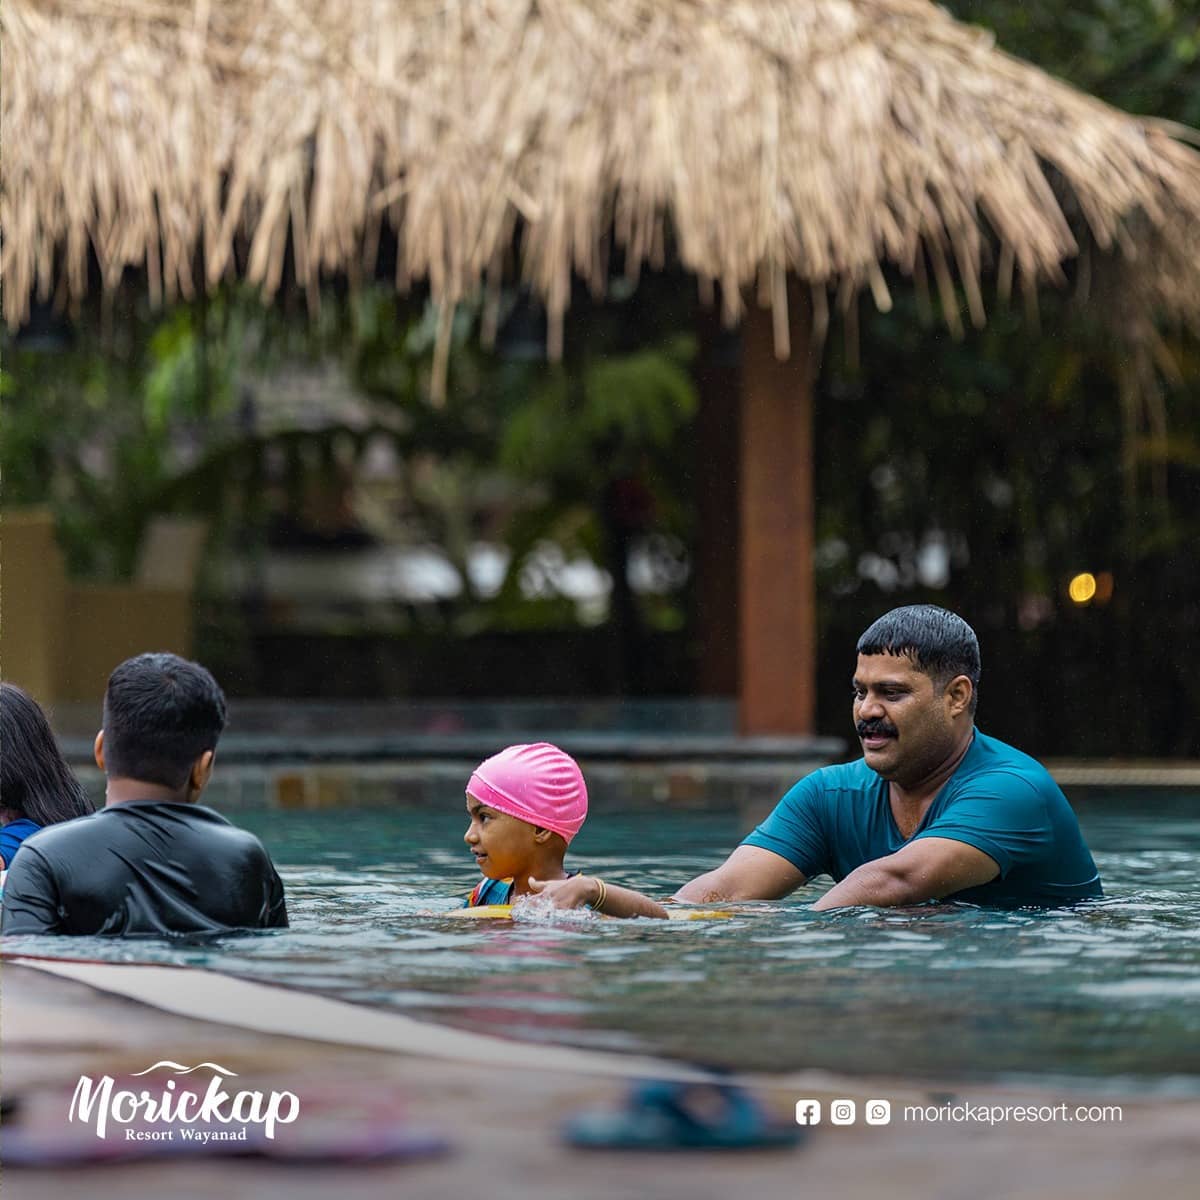 Discover the Ultimate Family Retreat: Morickap Resort, Your Premier Wayanad Getaway